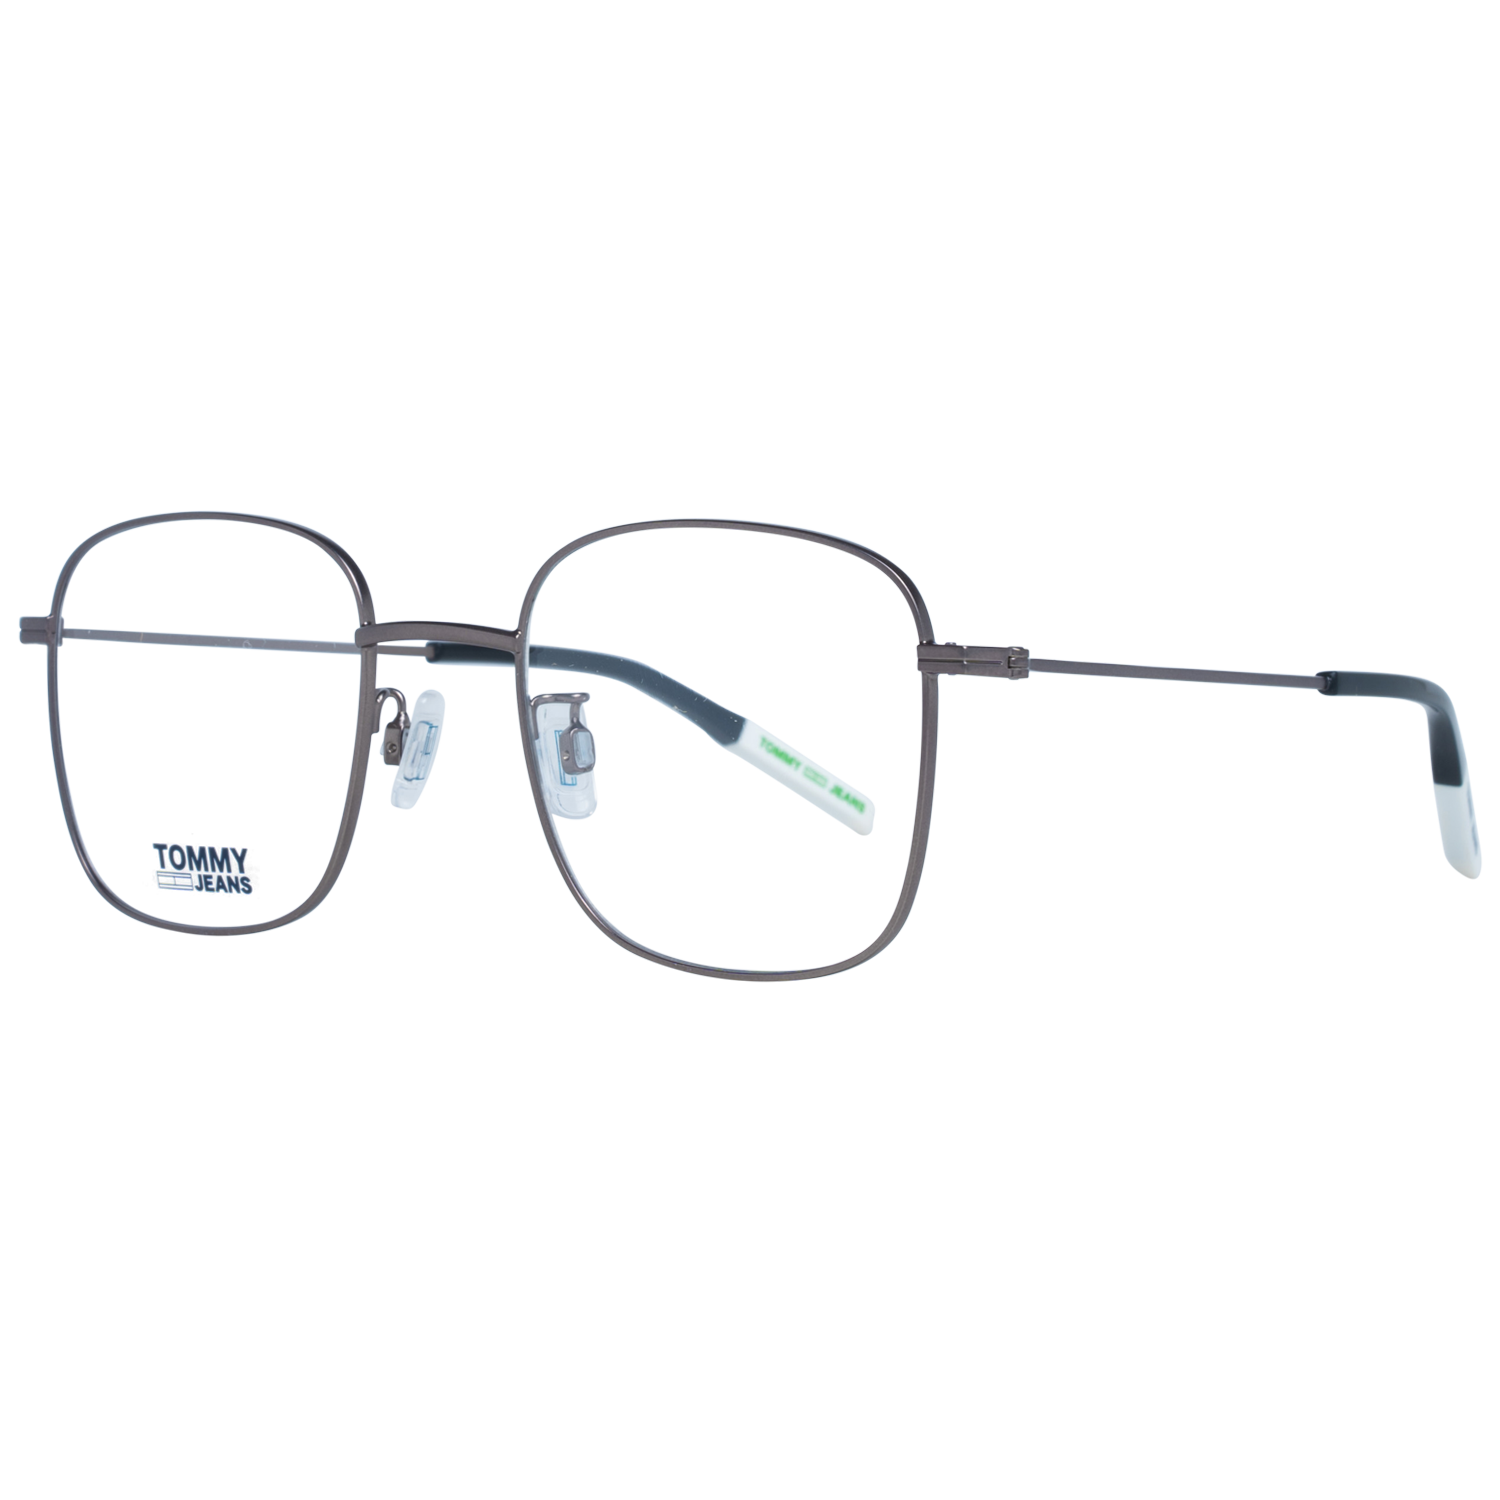 Tommy Hilfiger Frames Tommy Hilfiger Optical Frame TJ 0032 R80 49 Eyeglasses Eyewear UK USA Australia 